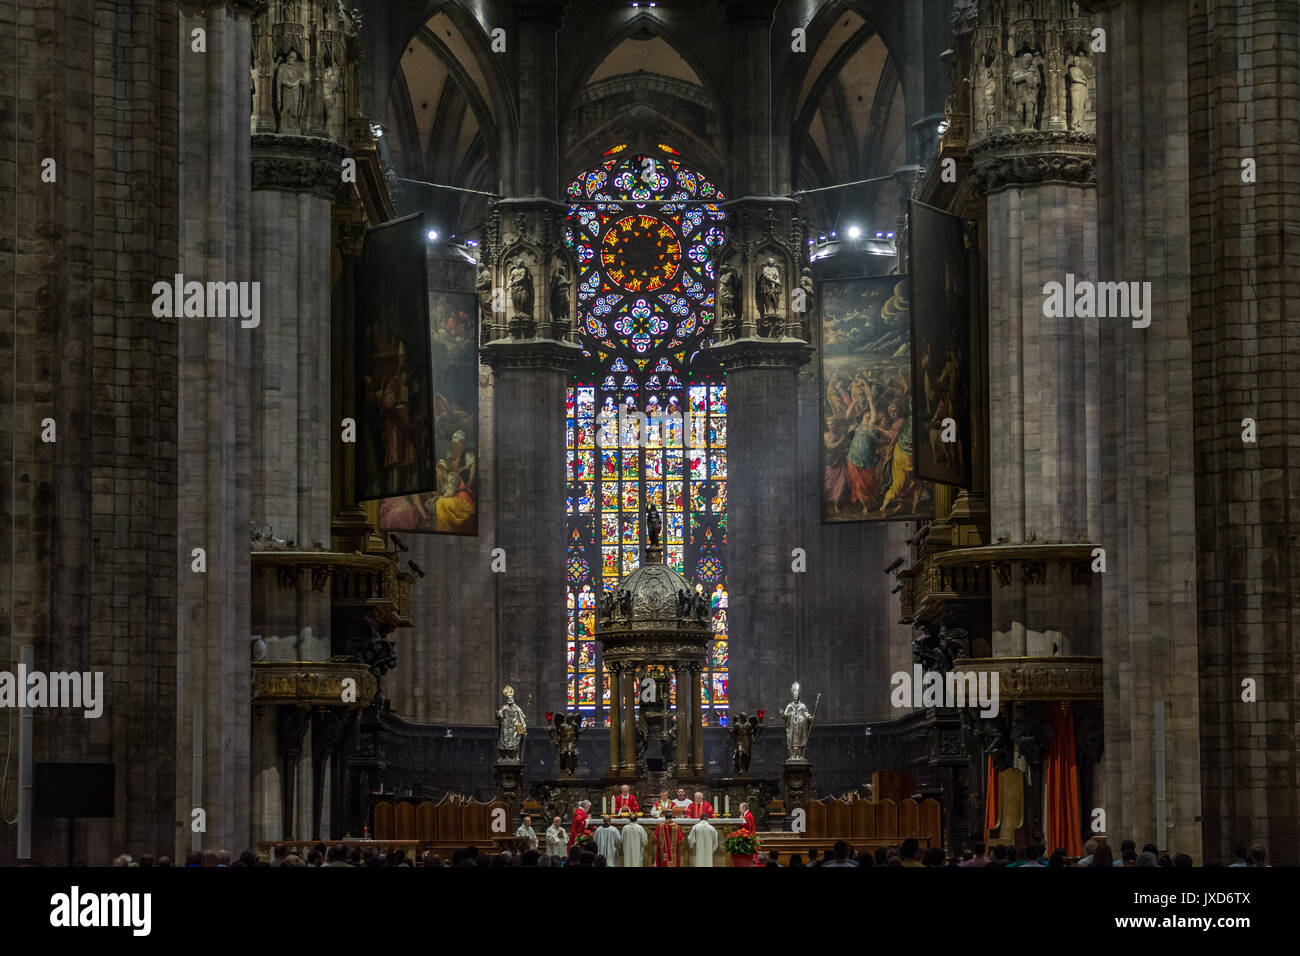 Innenraum der Mailänder Dom - Duomo di Milano, Mailand, Italien Stockfoto